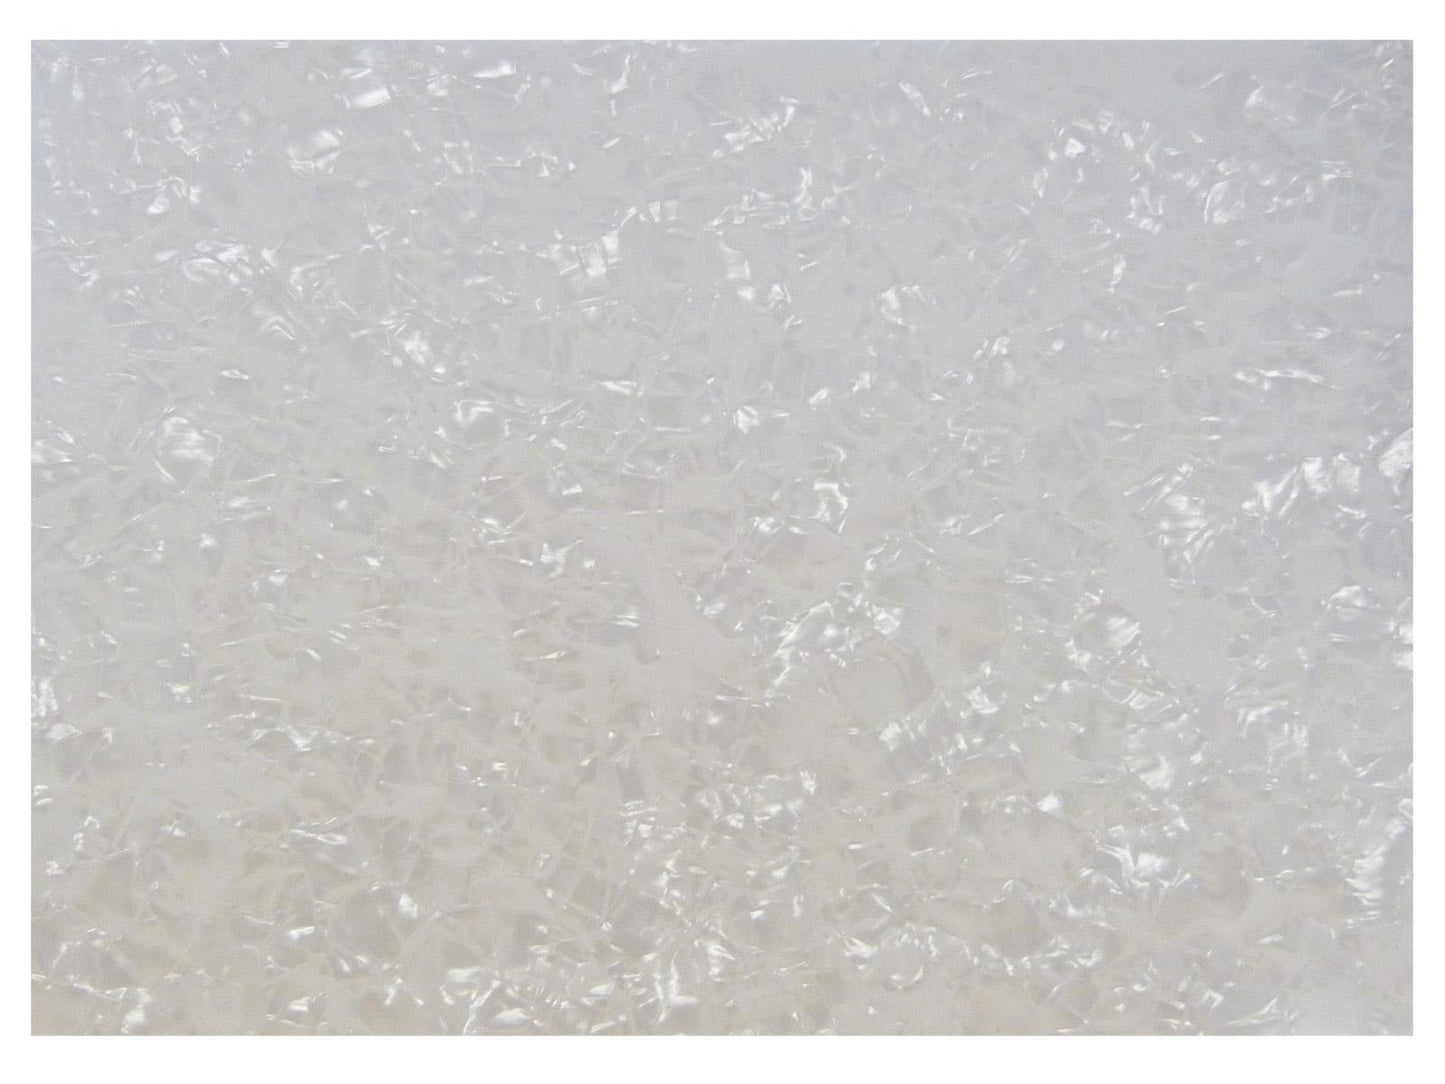 Luthitec White Pearloid PVC Sheet - 290x210x0.5mm (11.4x8.27x0.02")